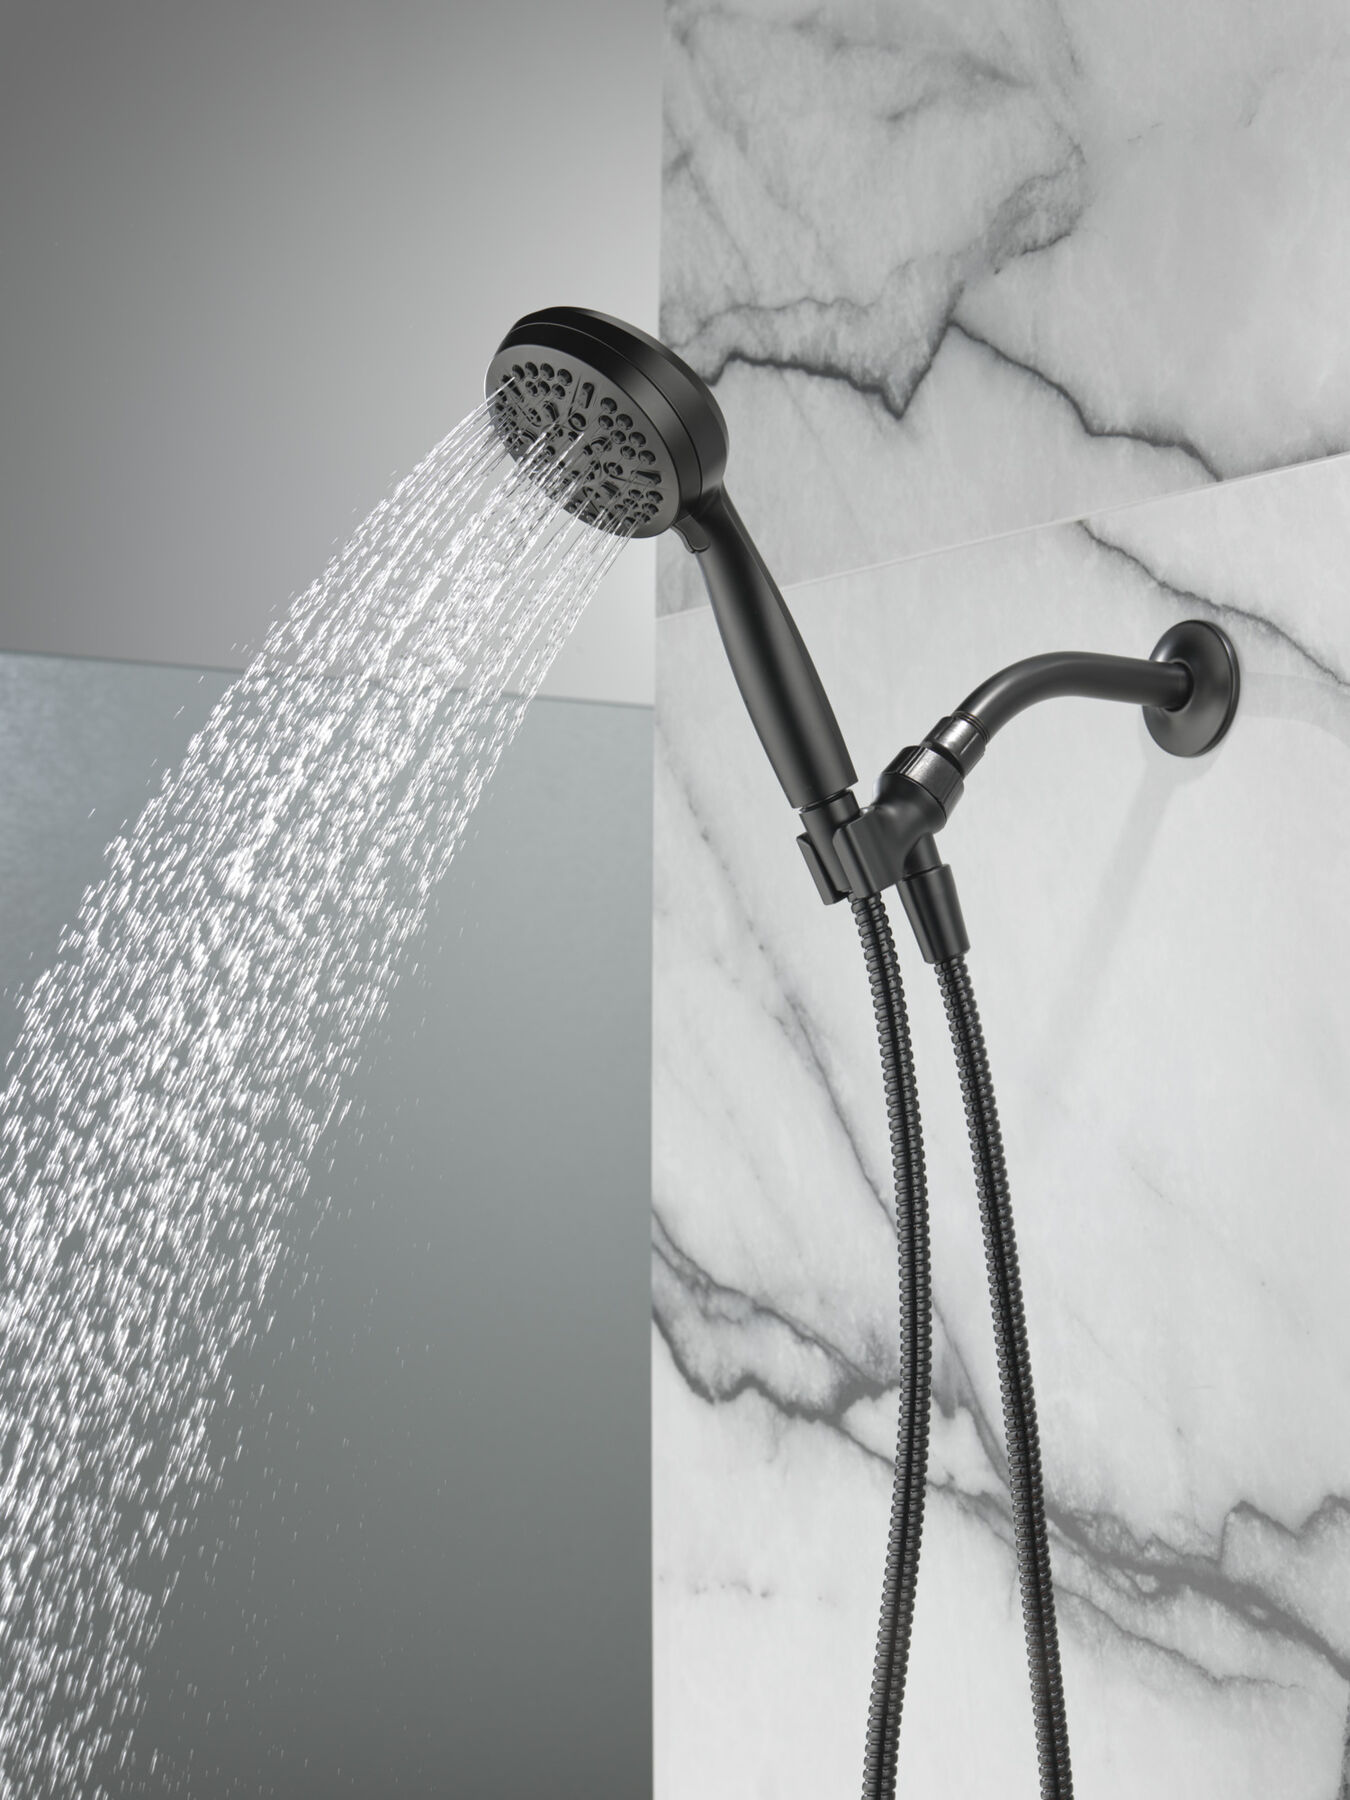 Button Rain Shower Set Bathtub Faucet Polished Brass Luxury Bathroom Wall  Mount Hand Shower Chrome/Black